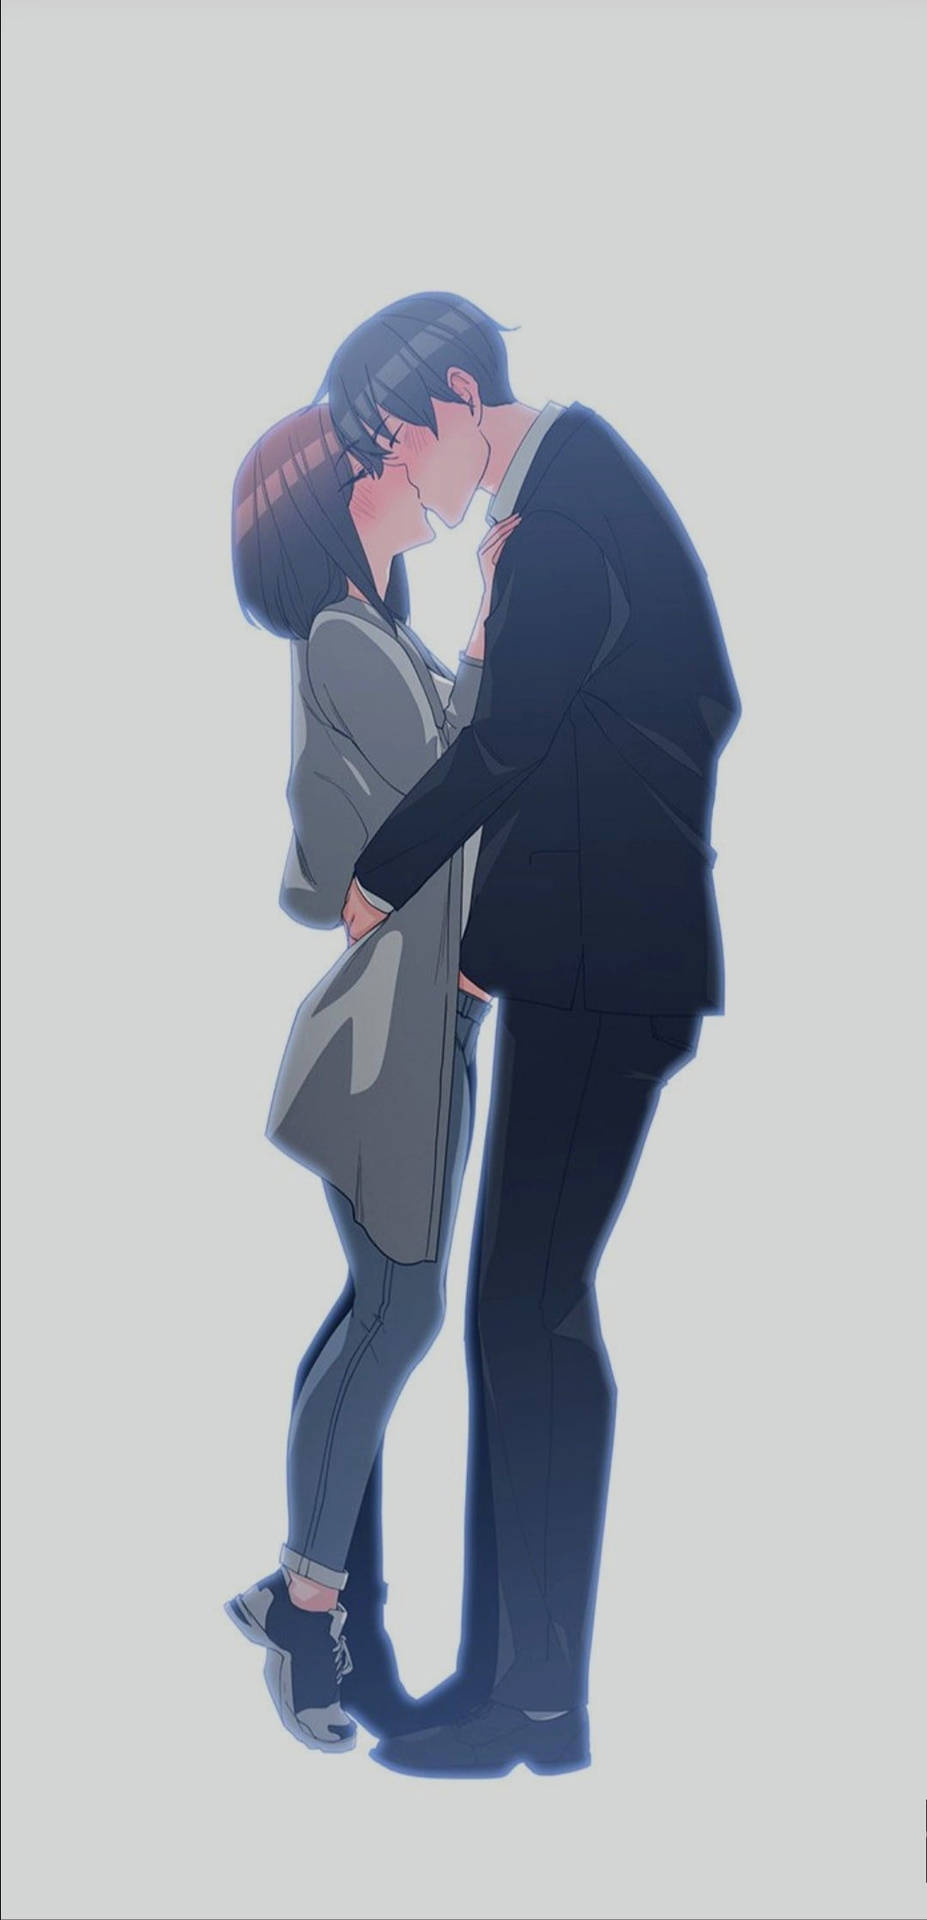 Anime Couple Kiss On White Background Wallpaper